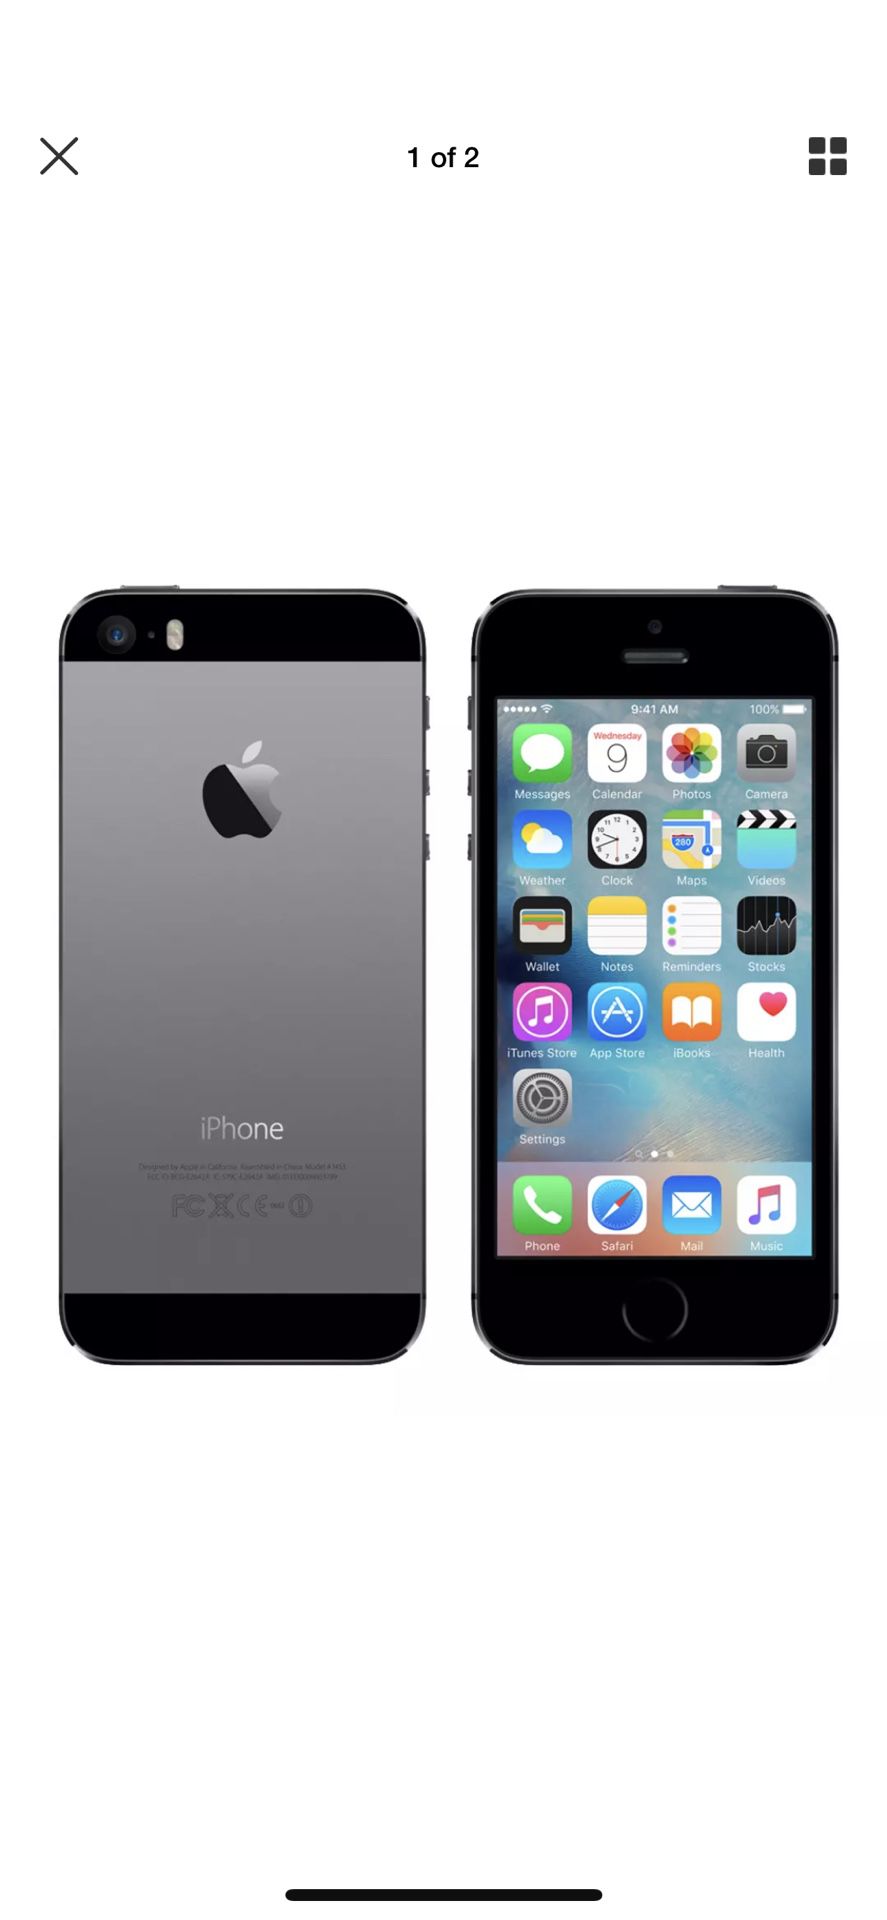 iPhone 5s 32gb factor unlocked metro PCs,cricket,att,T-Mobile,sprint,Verizon,straight talk,boost Factor unlocked